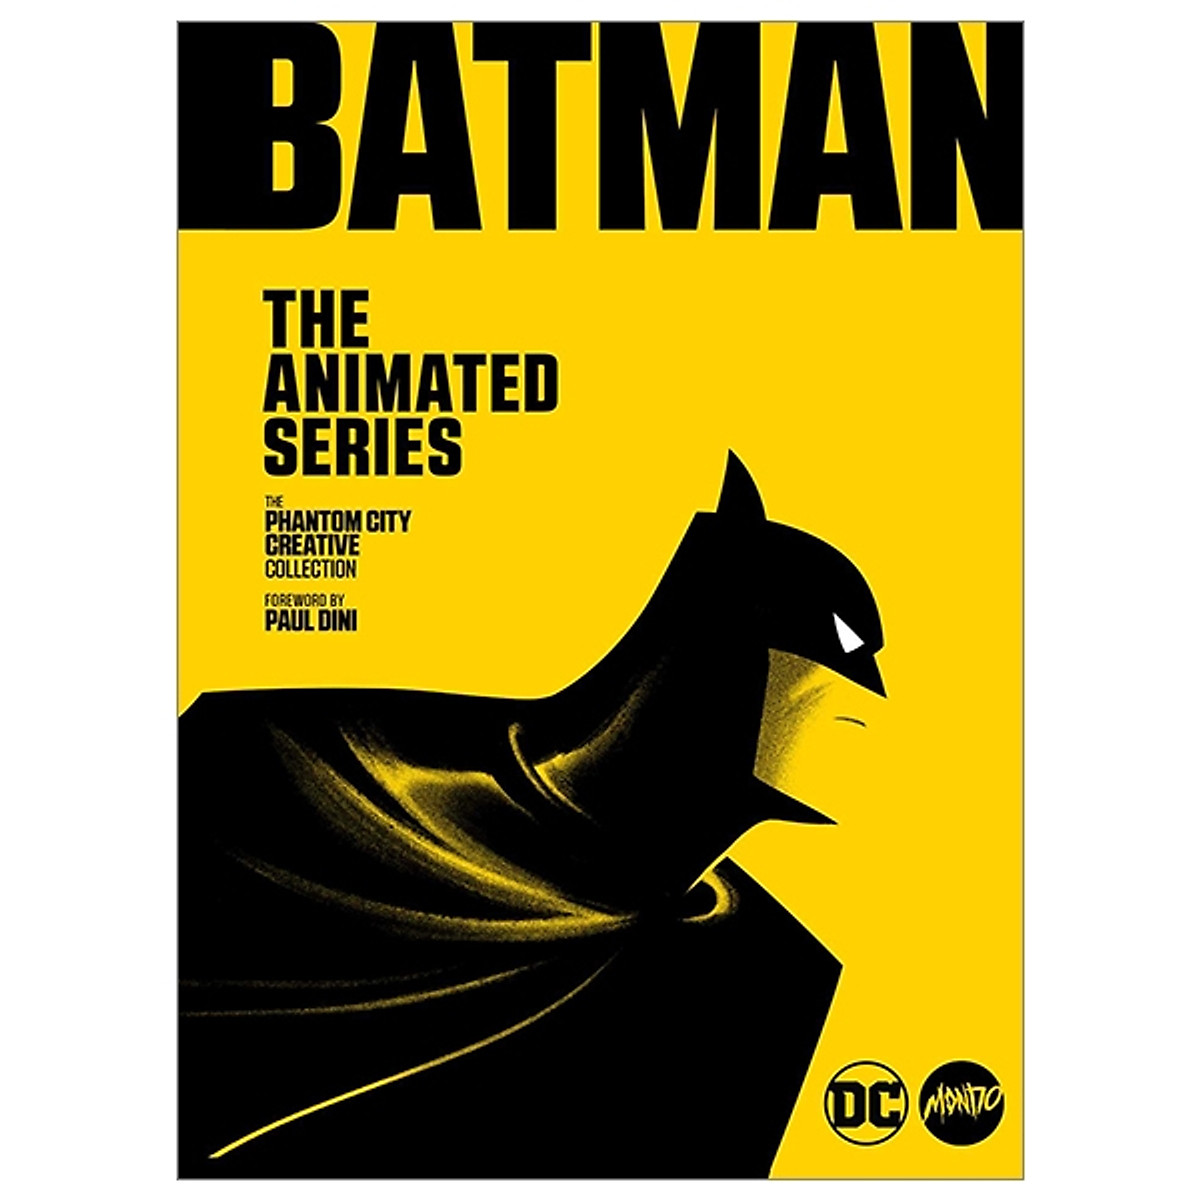 Mua Batman: The Animated Series: The Phantom City Creative Collection